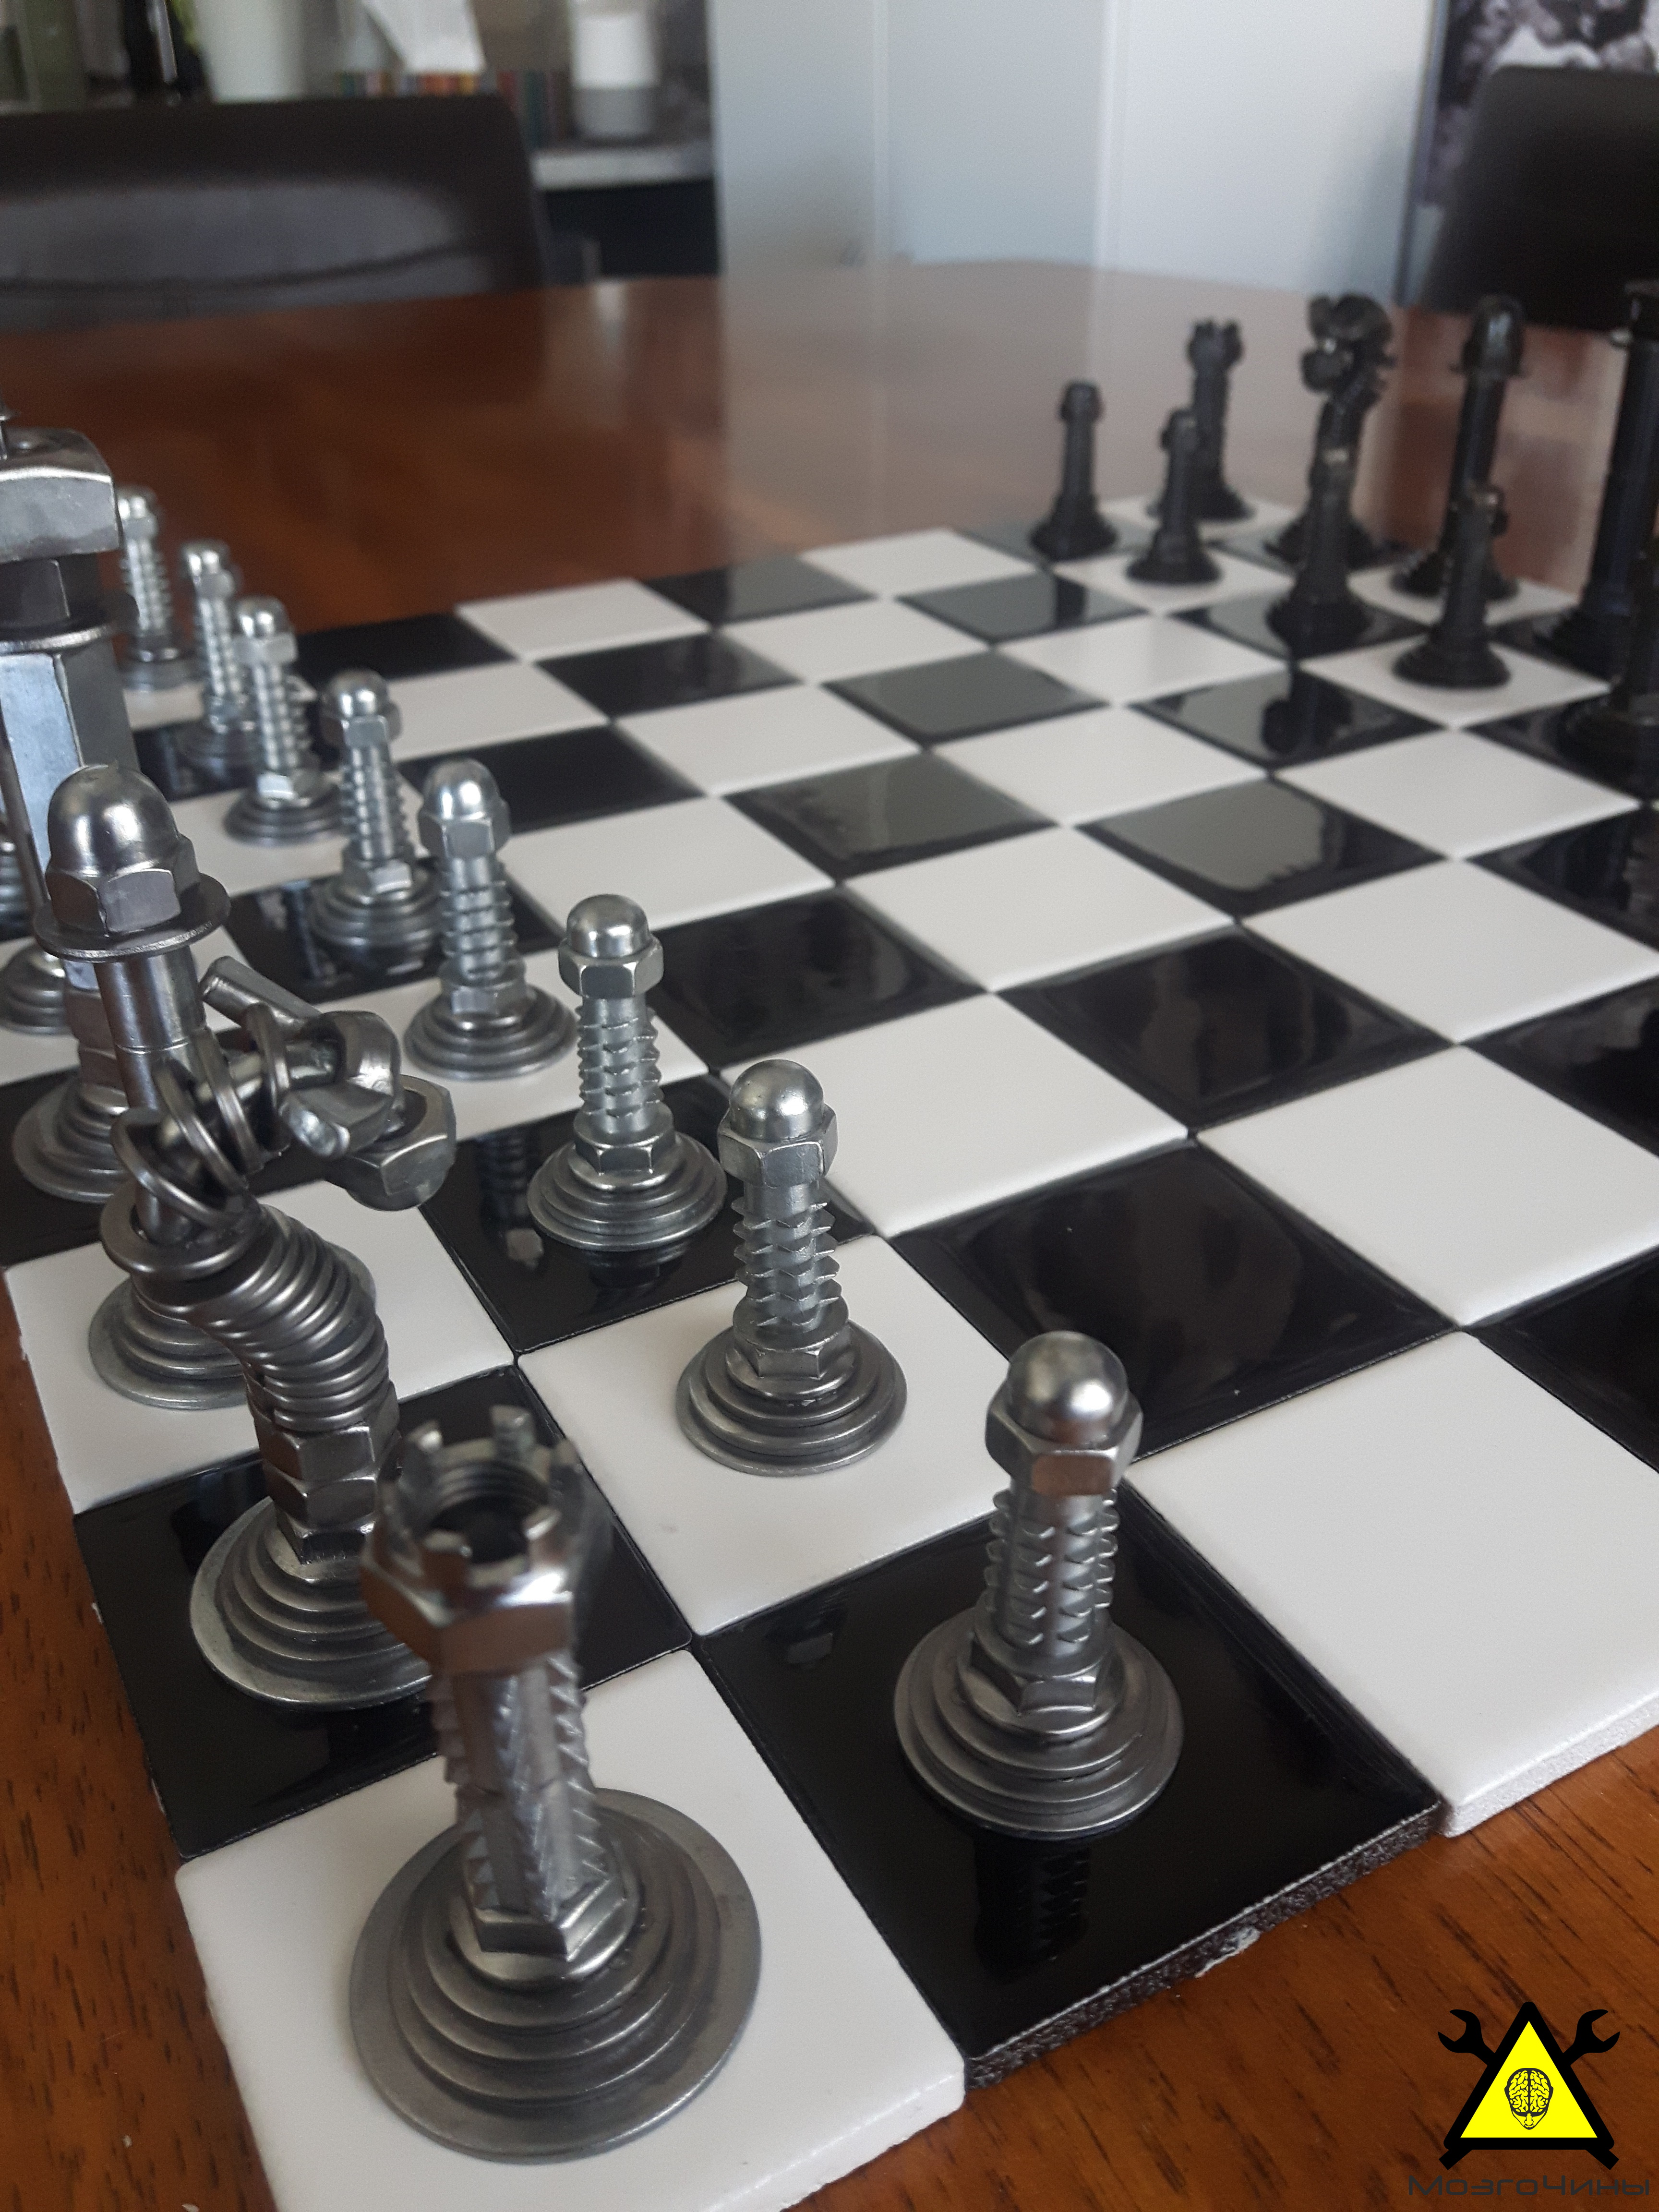 Правила шахмат ФИДЕ